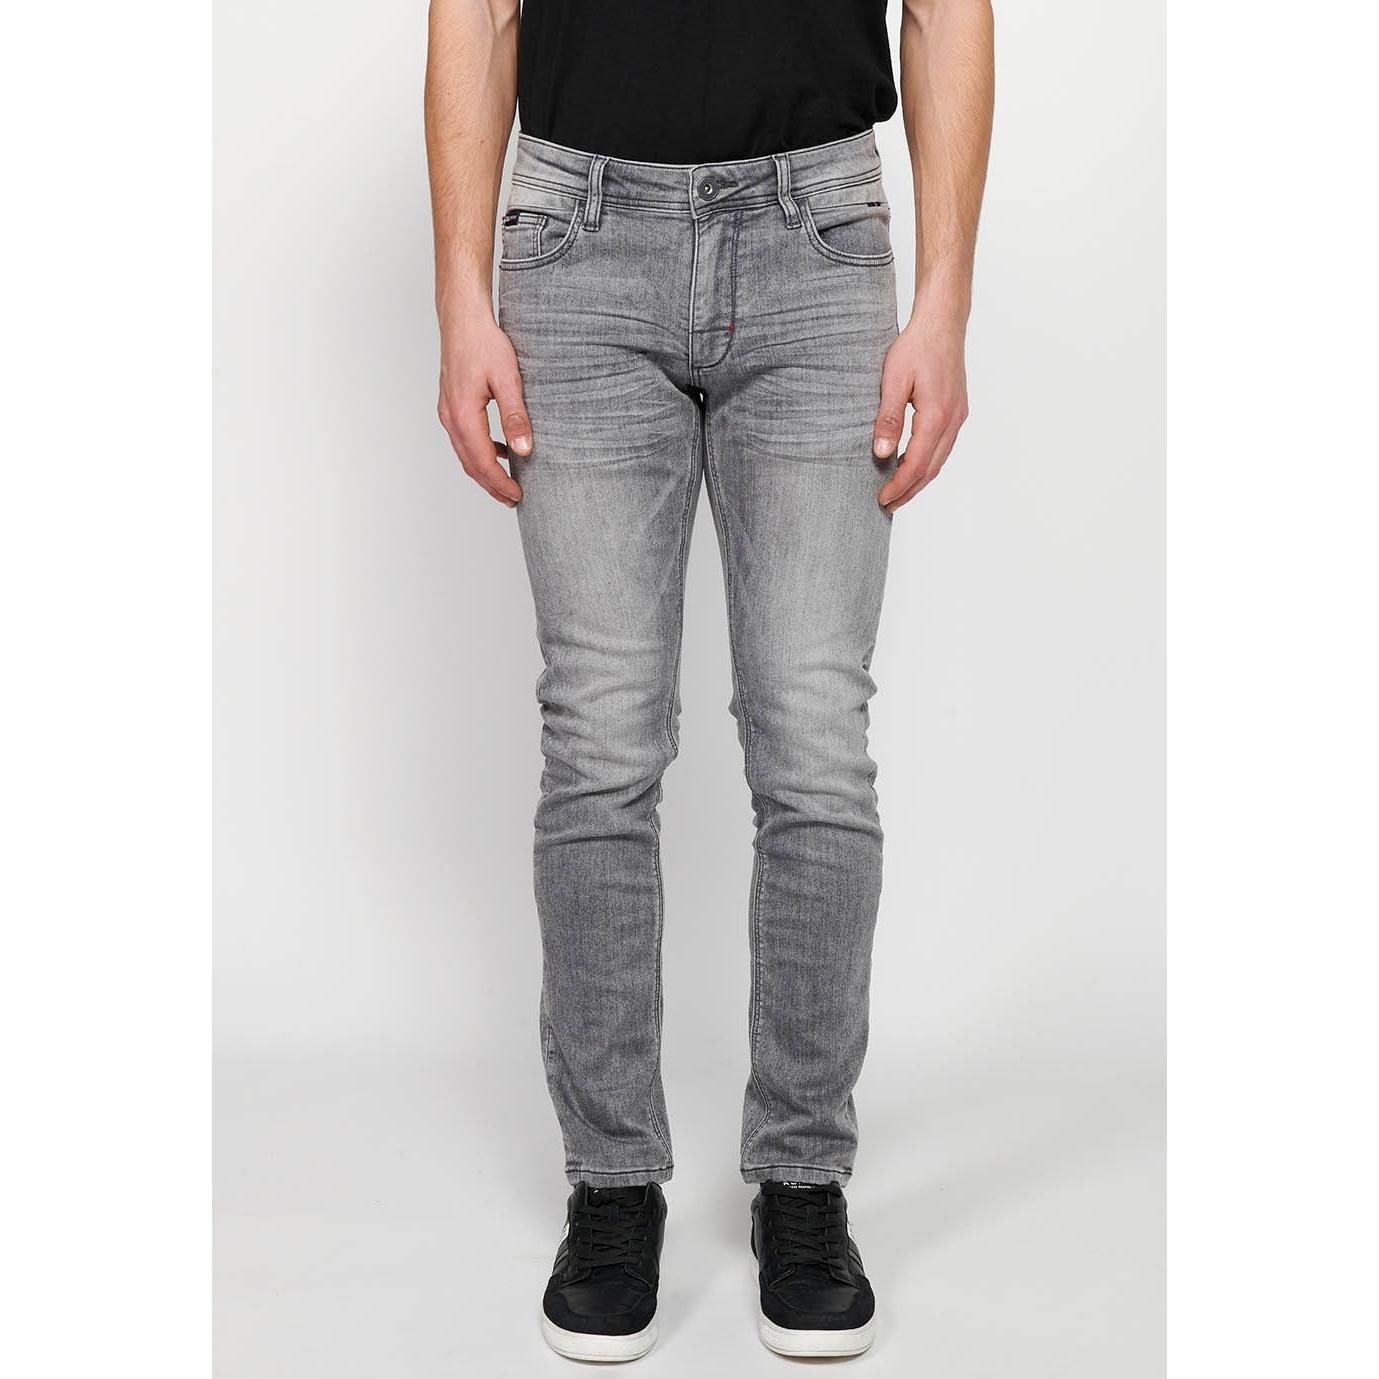 Koroshi - Koroshi Pantalón largo Jeans denim slim fit con Cinco bolsillos, uno cerillero de Color Denim Gris para Hombre